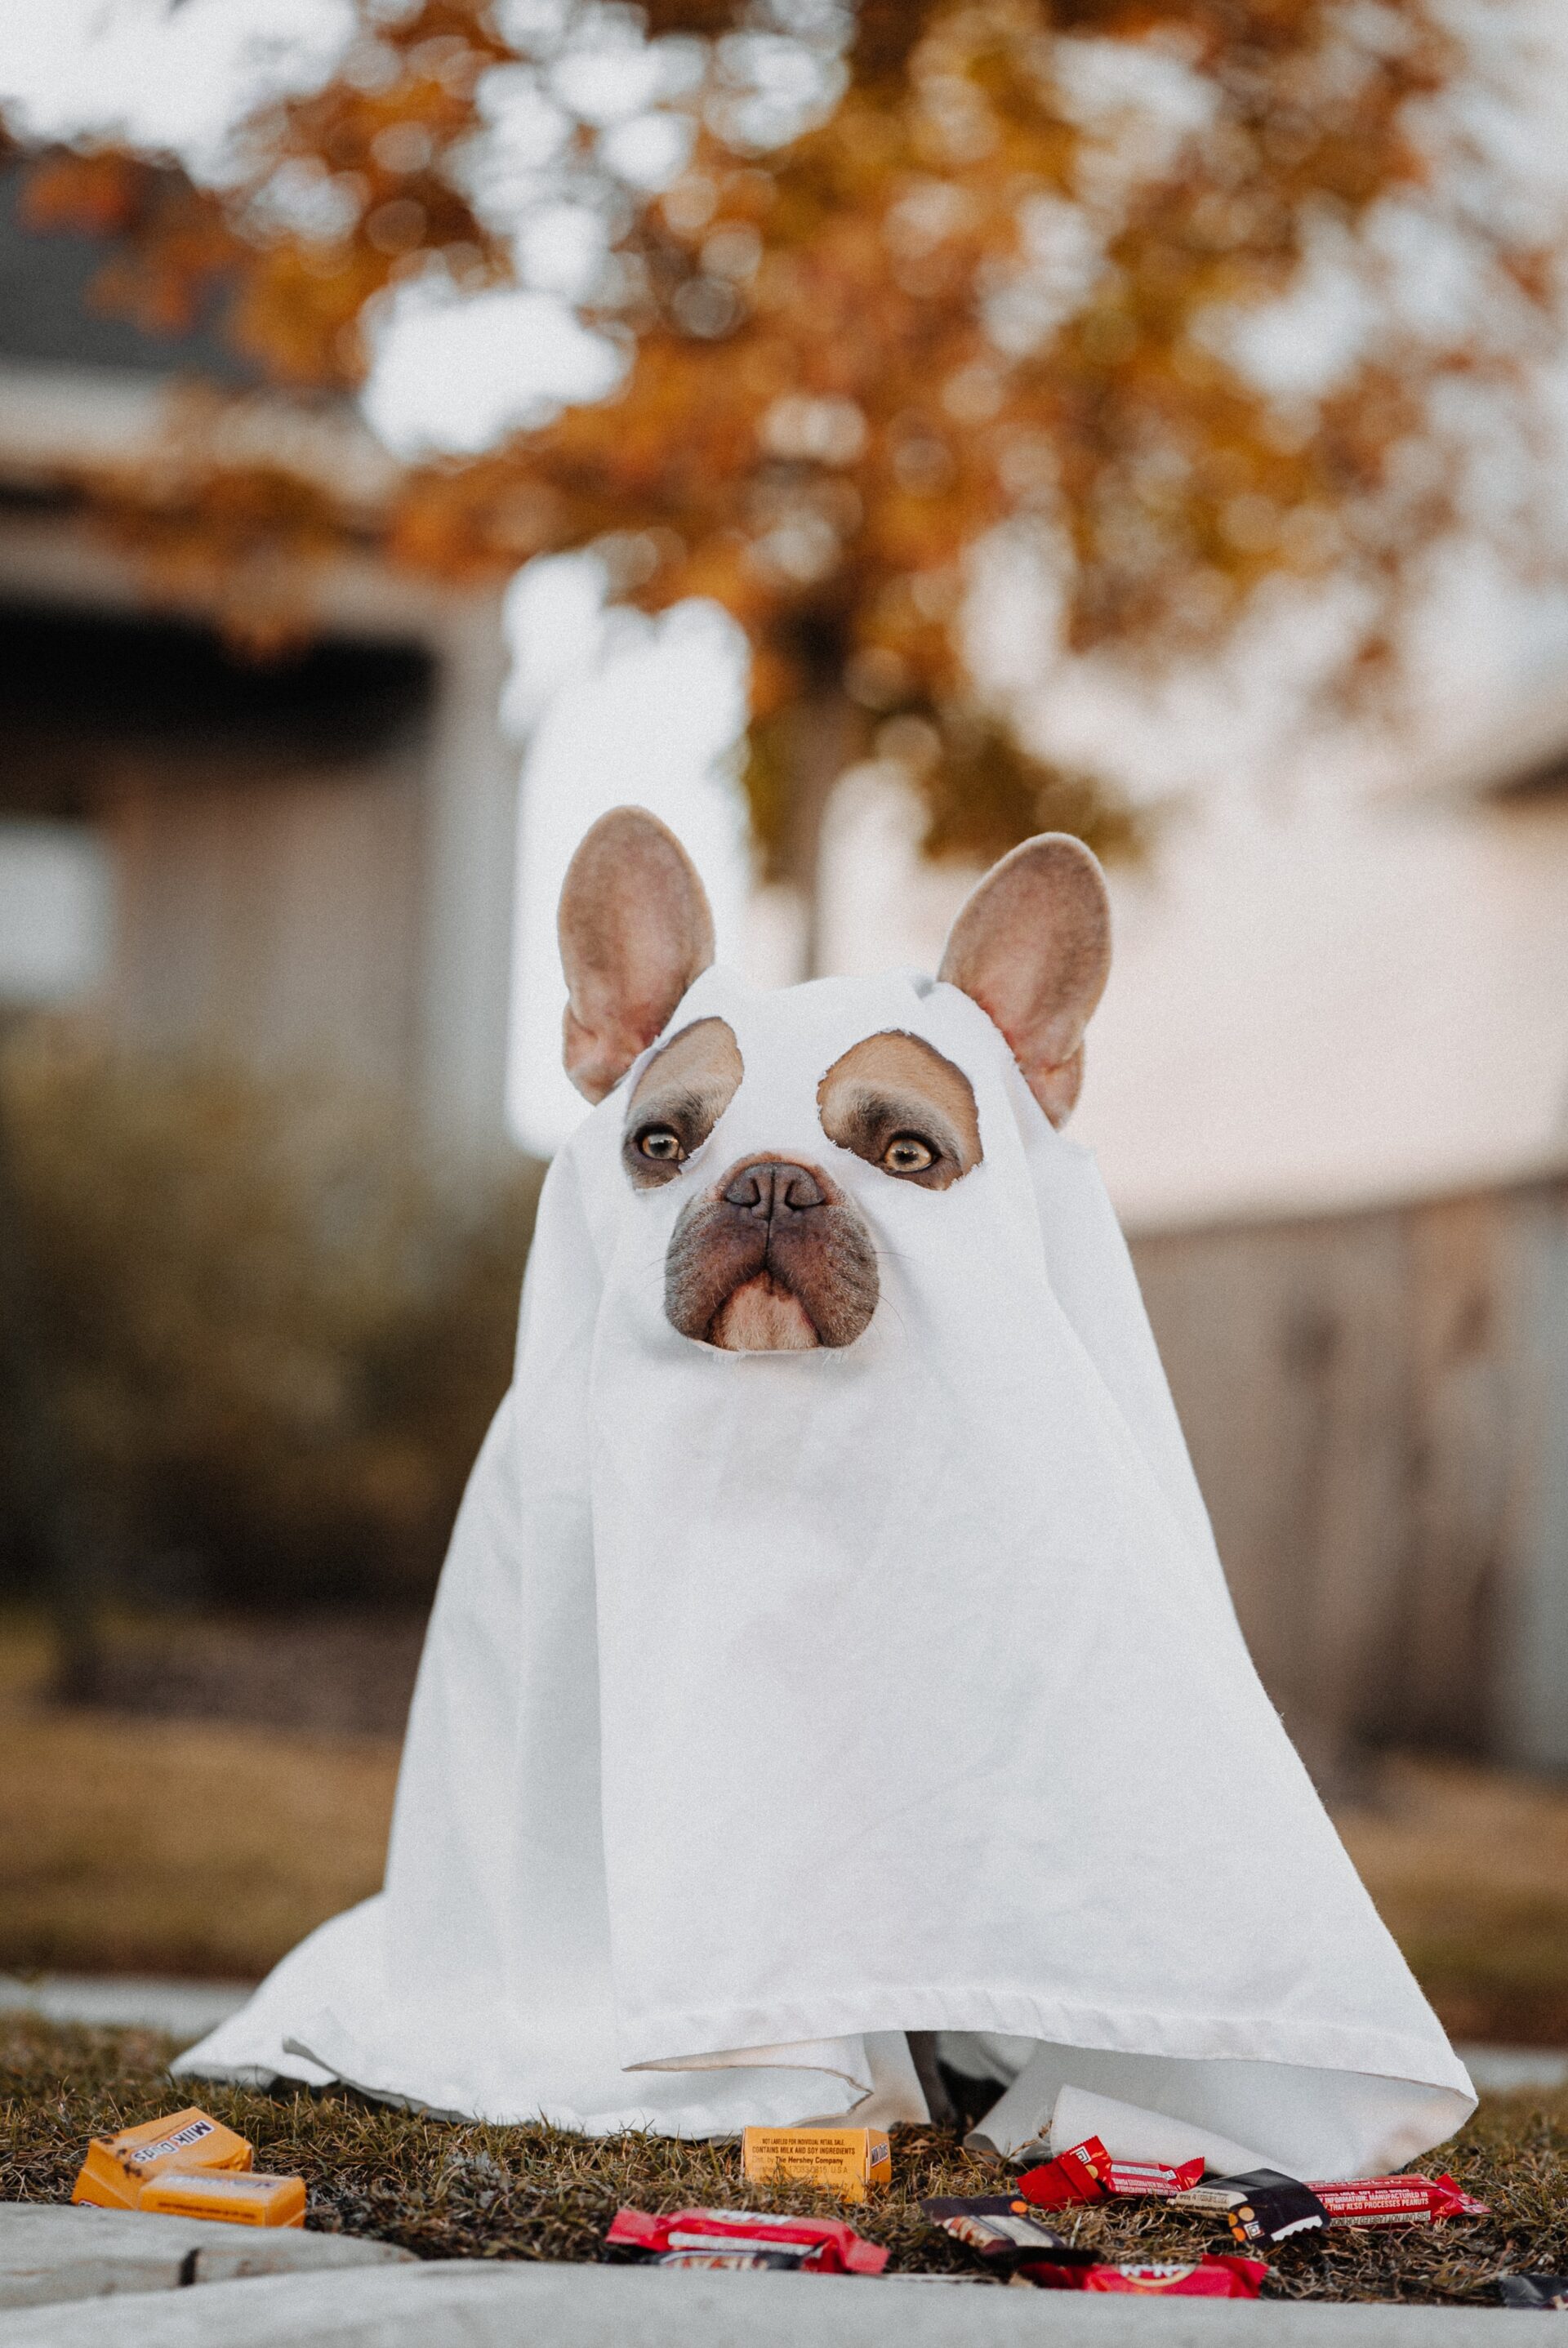 Dog in costume